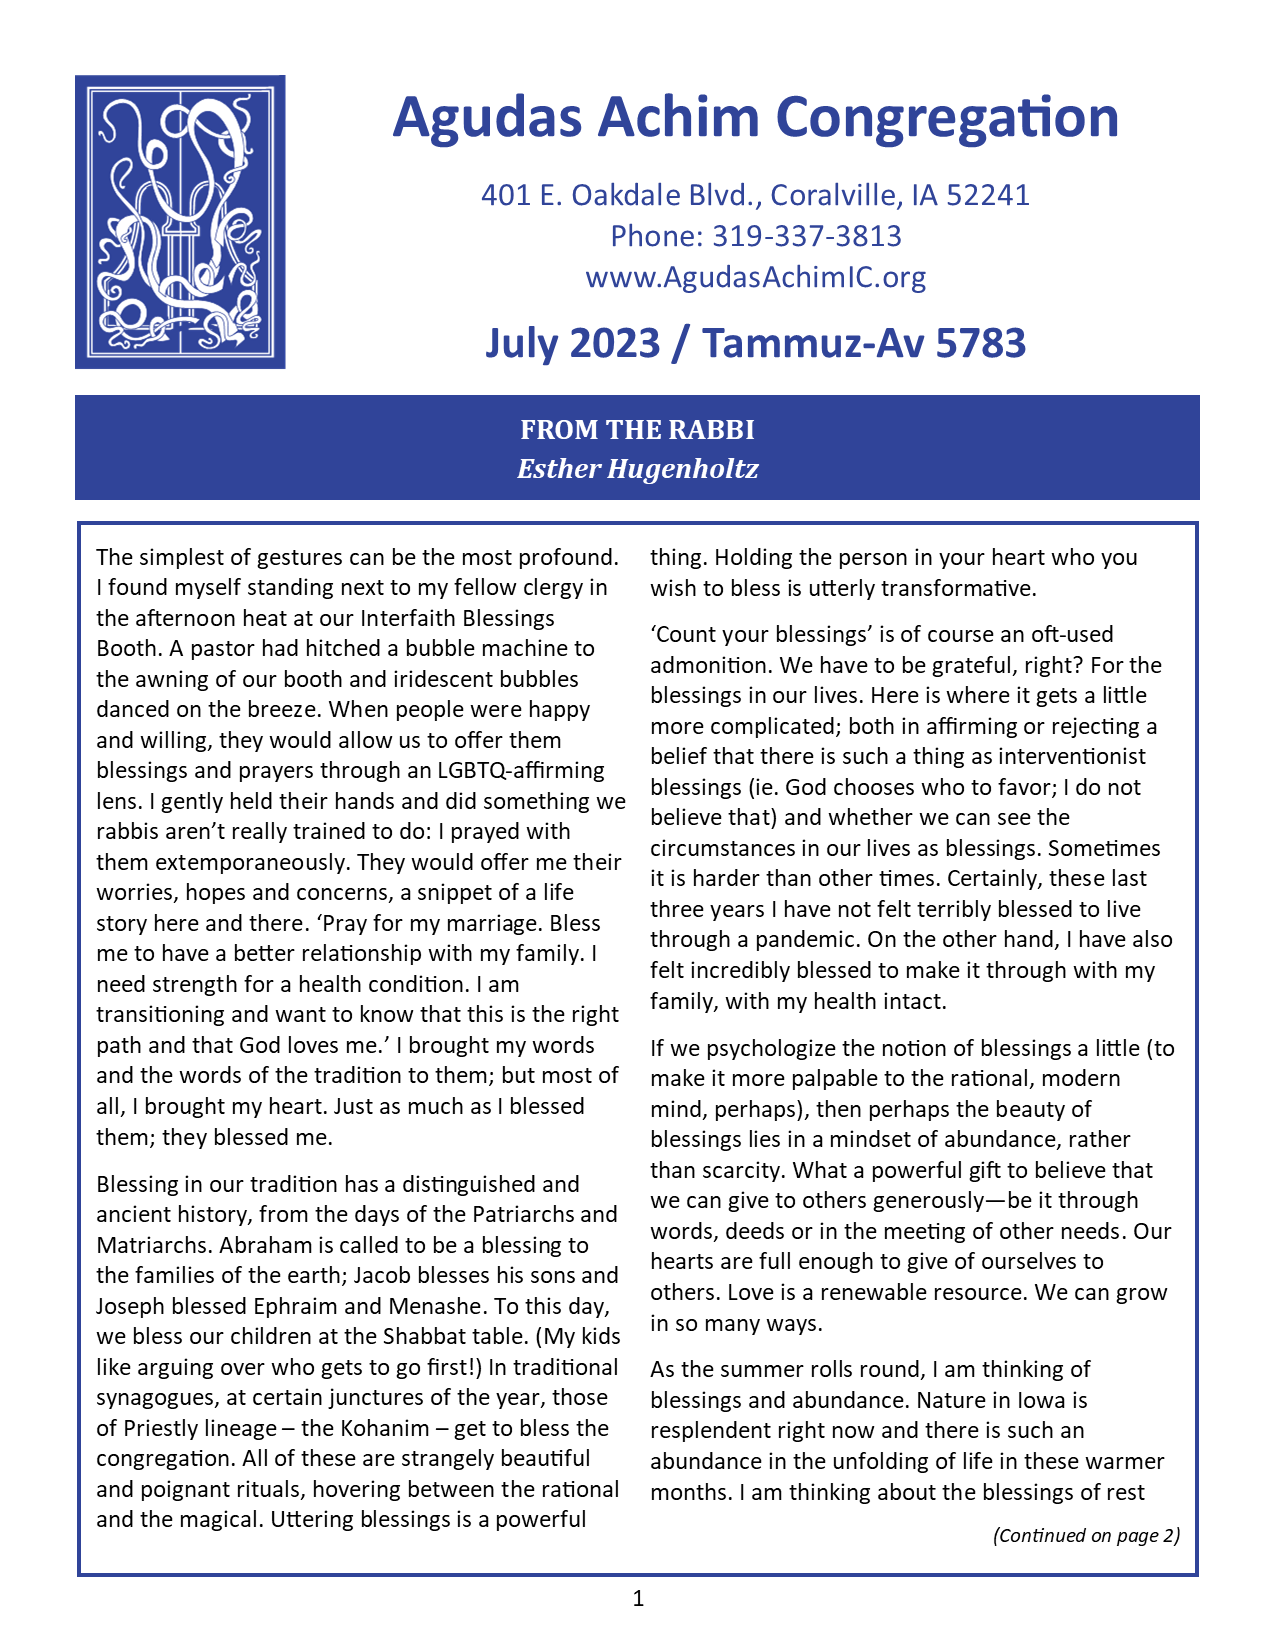 July 2023 Bulletin